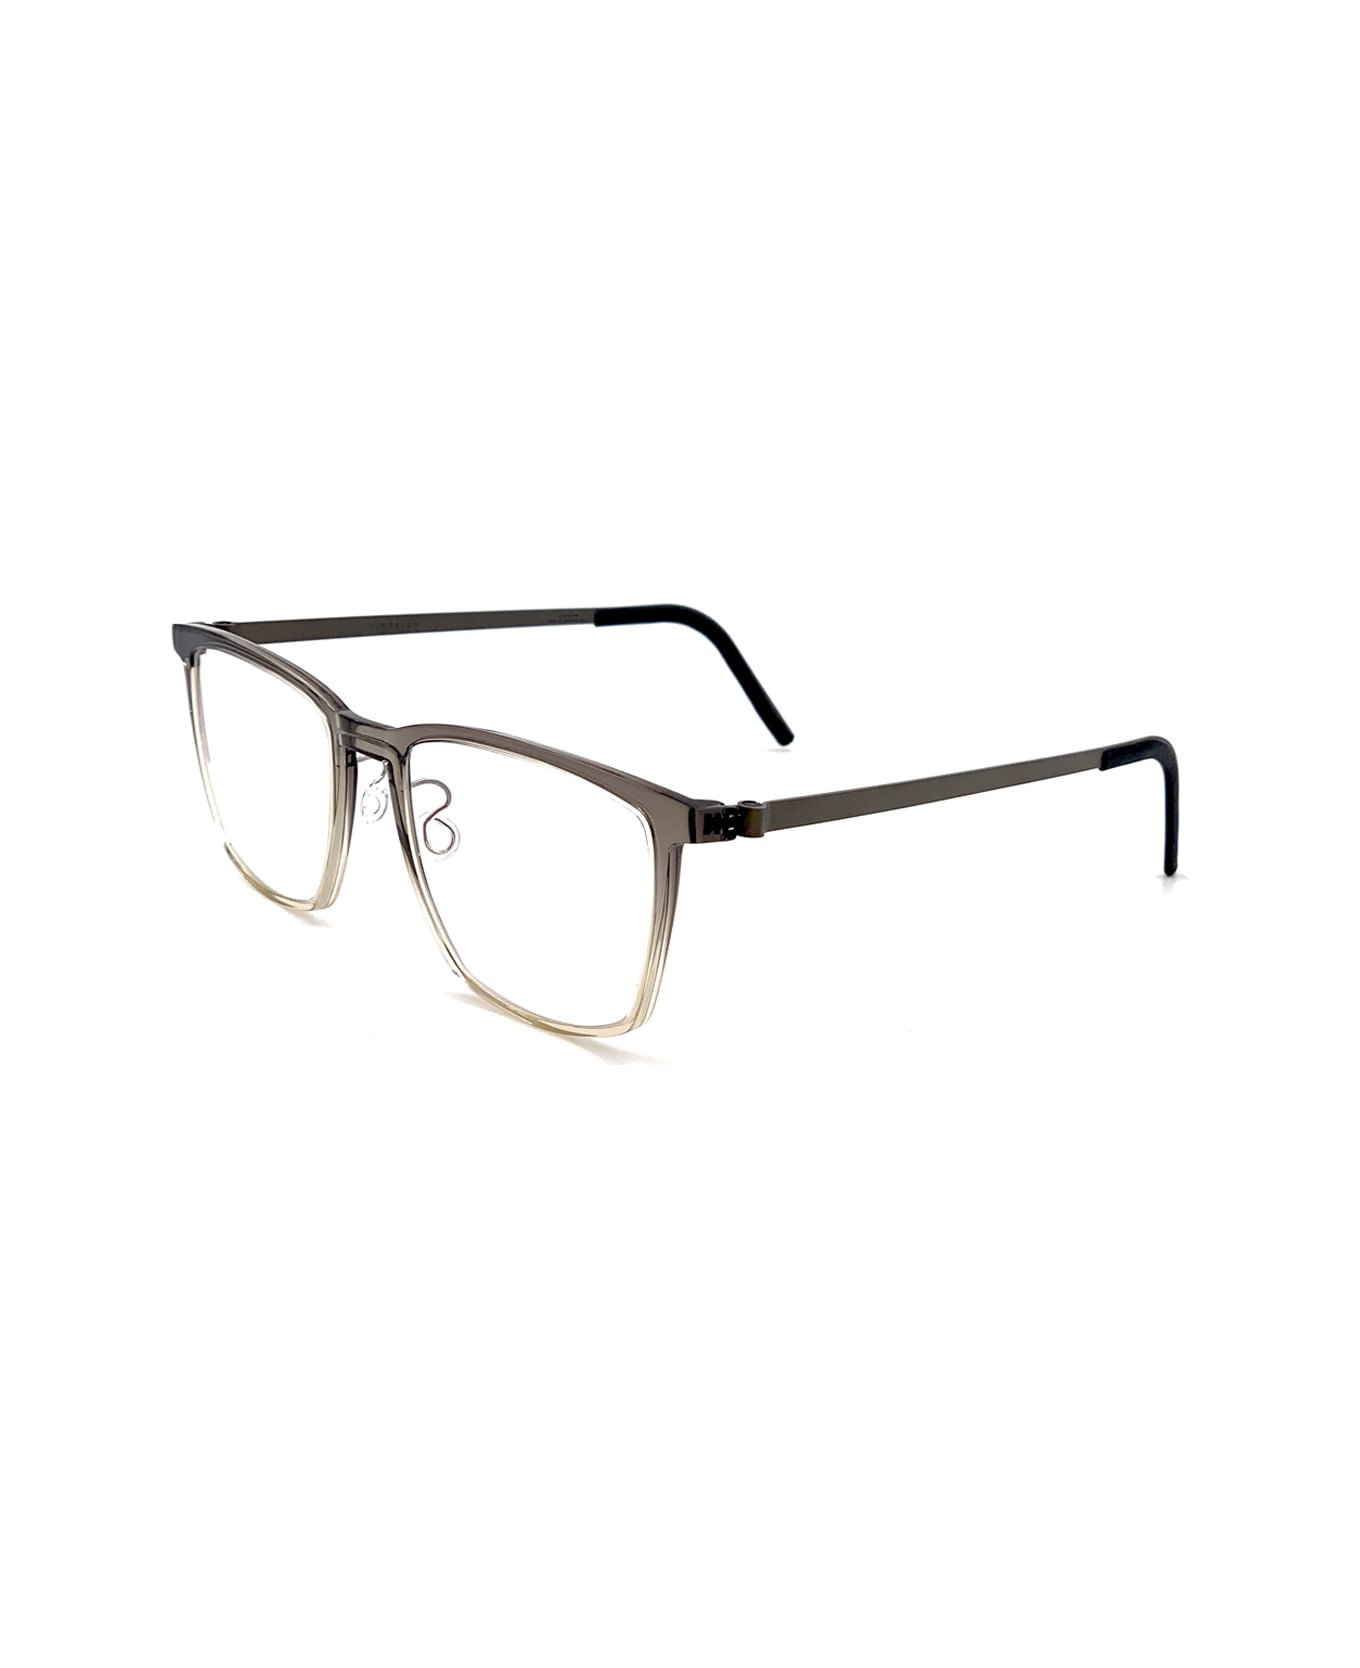 LINDBERG Acetanium 1260 Glasses - Grigio アイウェア